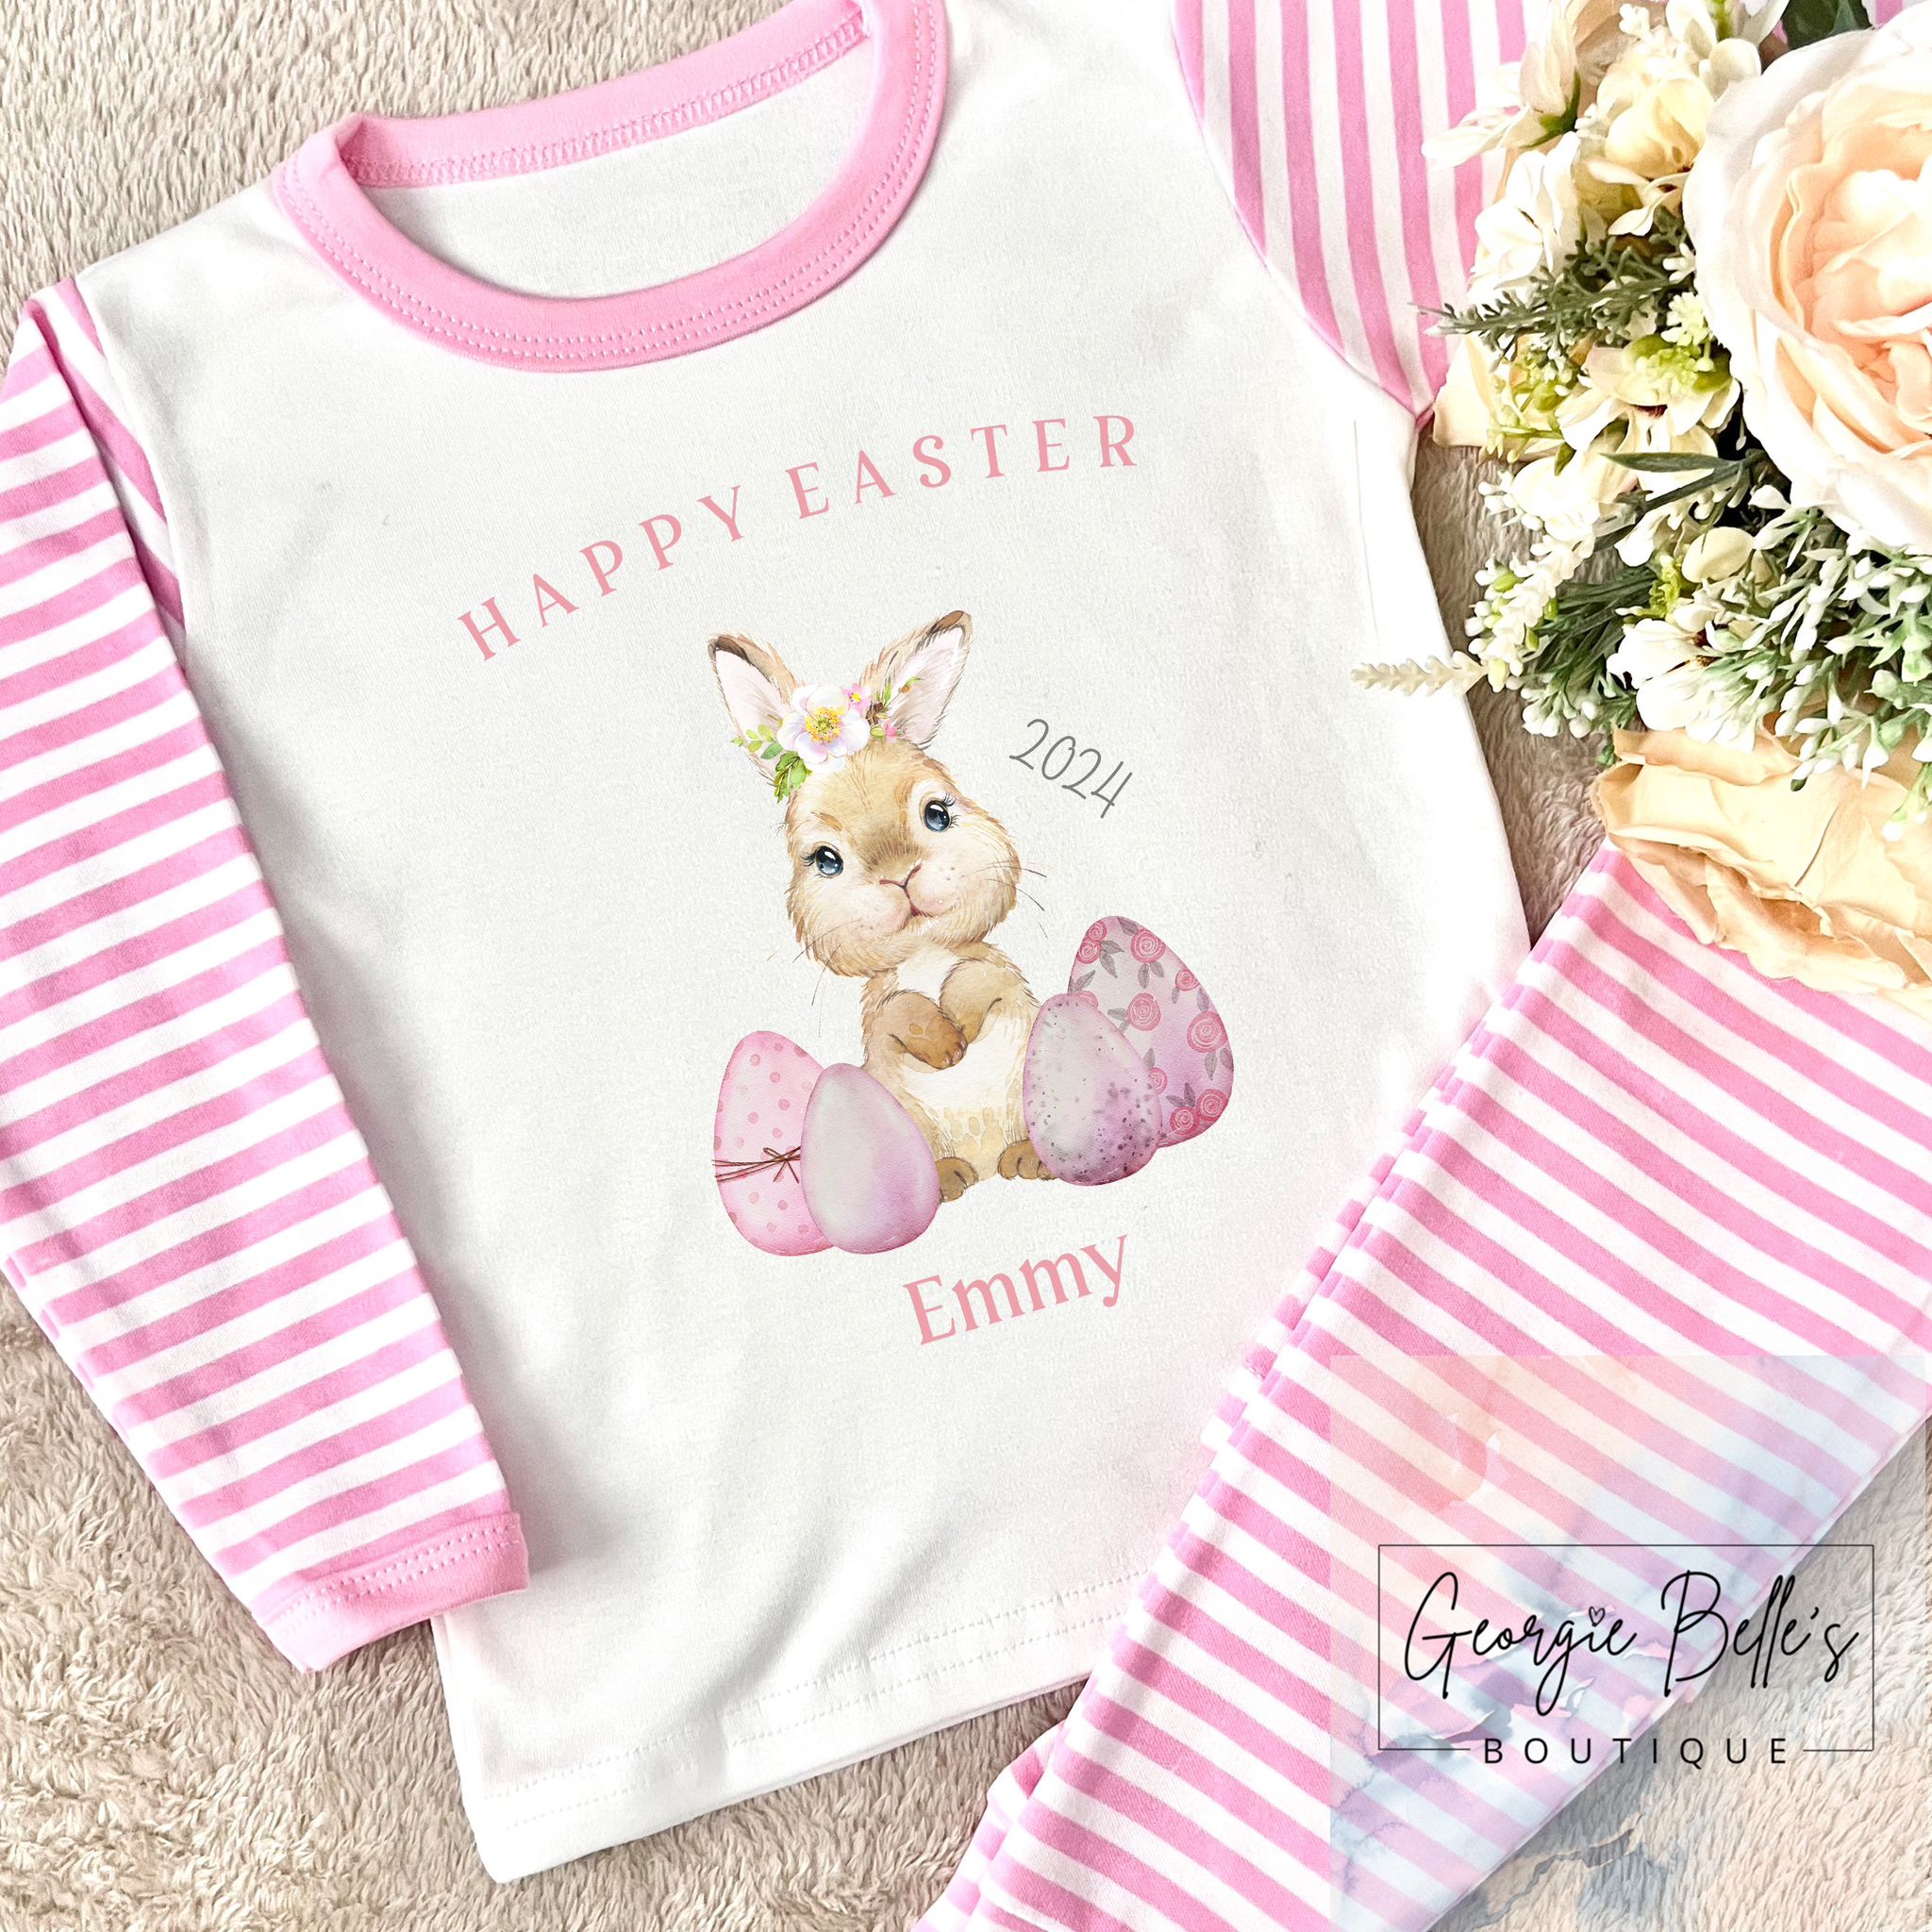 Personalised Easter Pyjamas - Happy Easter Pink Bunny Design